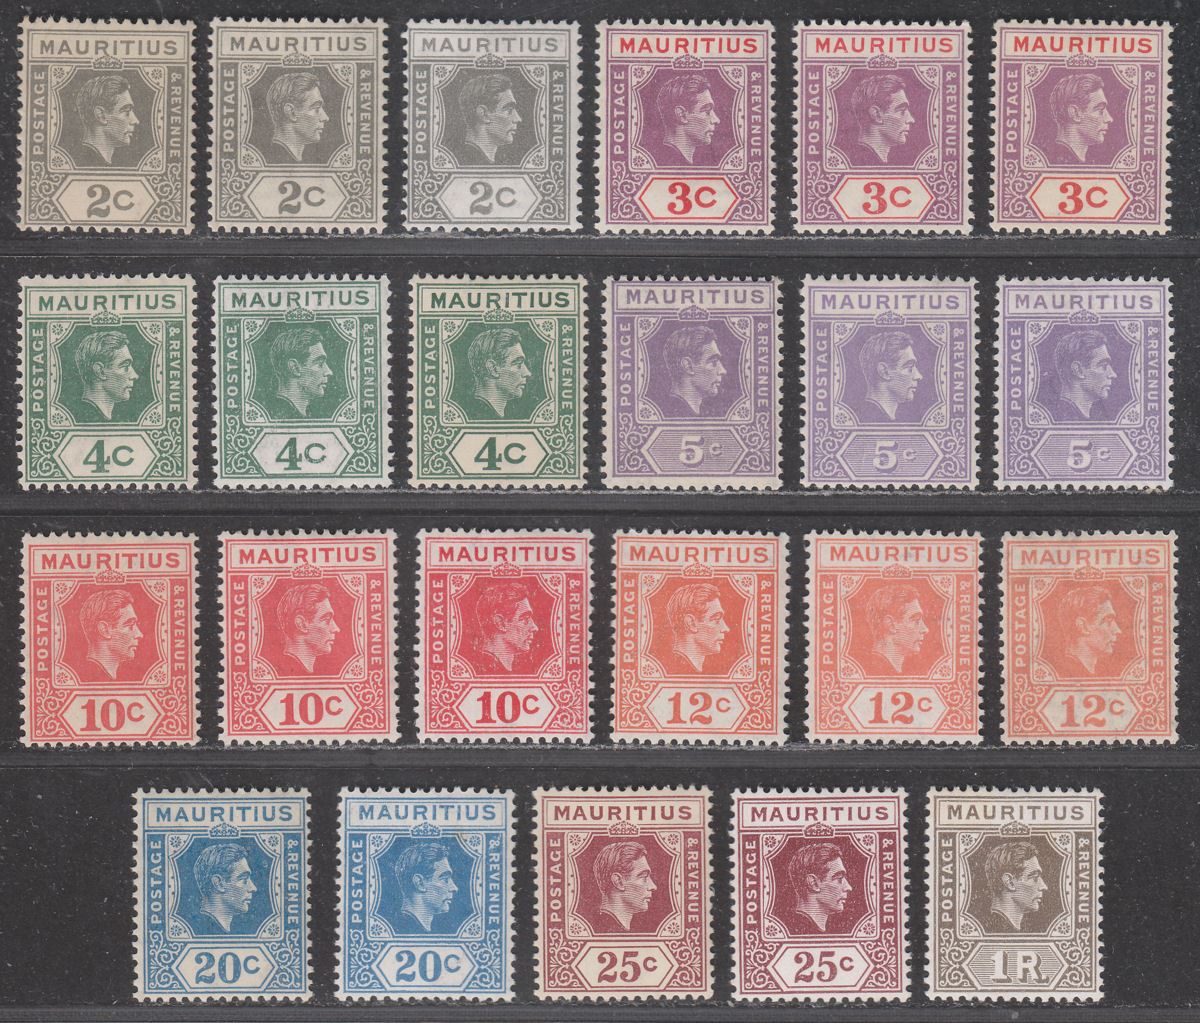 Mauritius 1938 King George VI Set to 1r Mint SG252-260